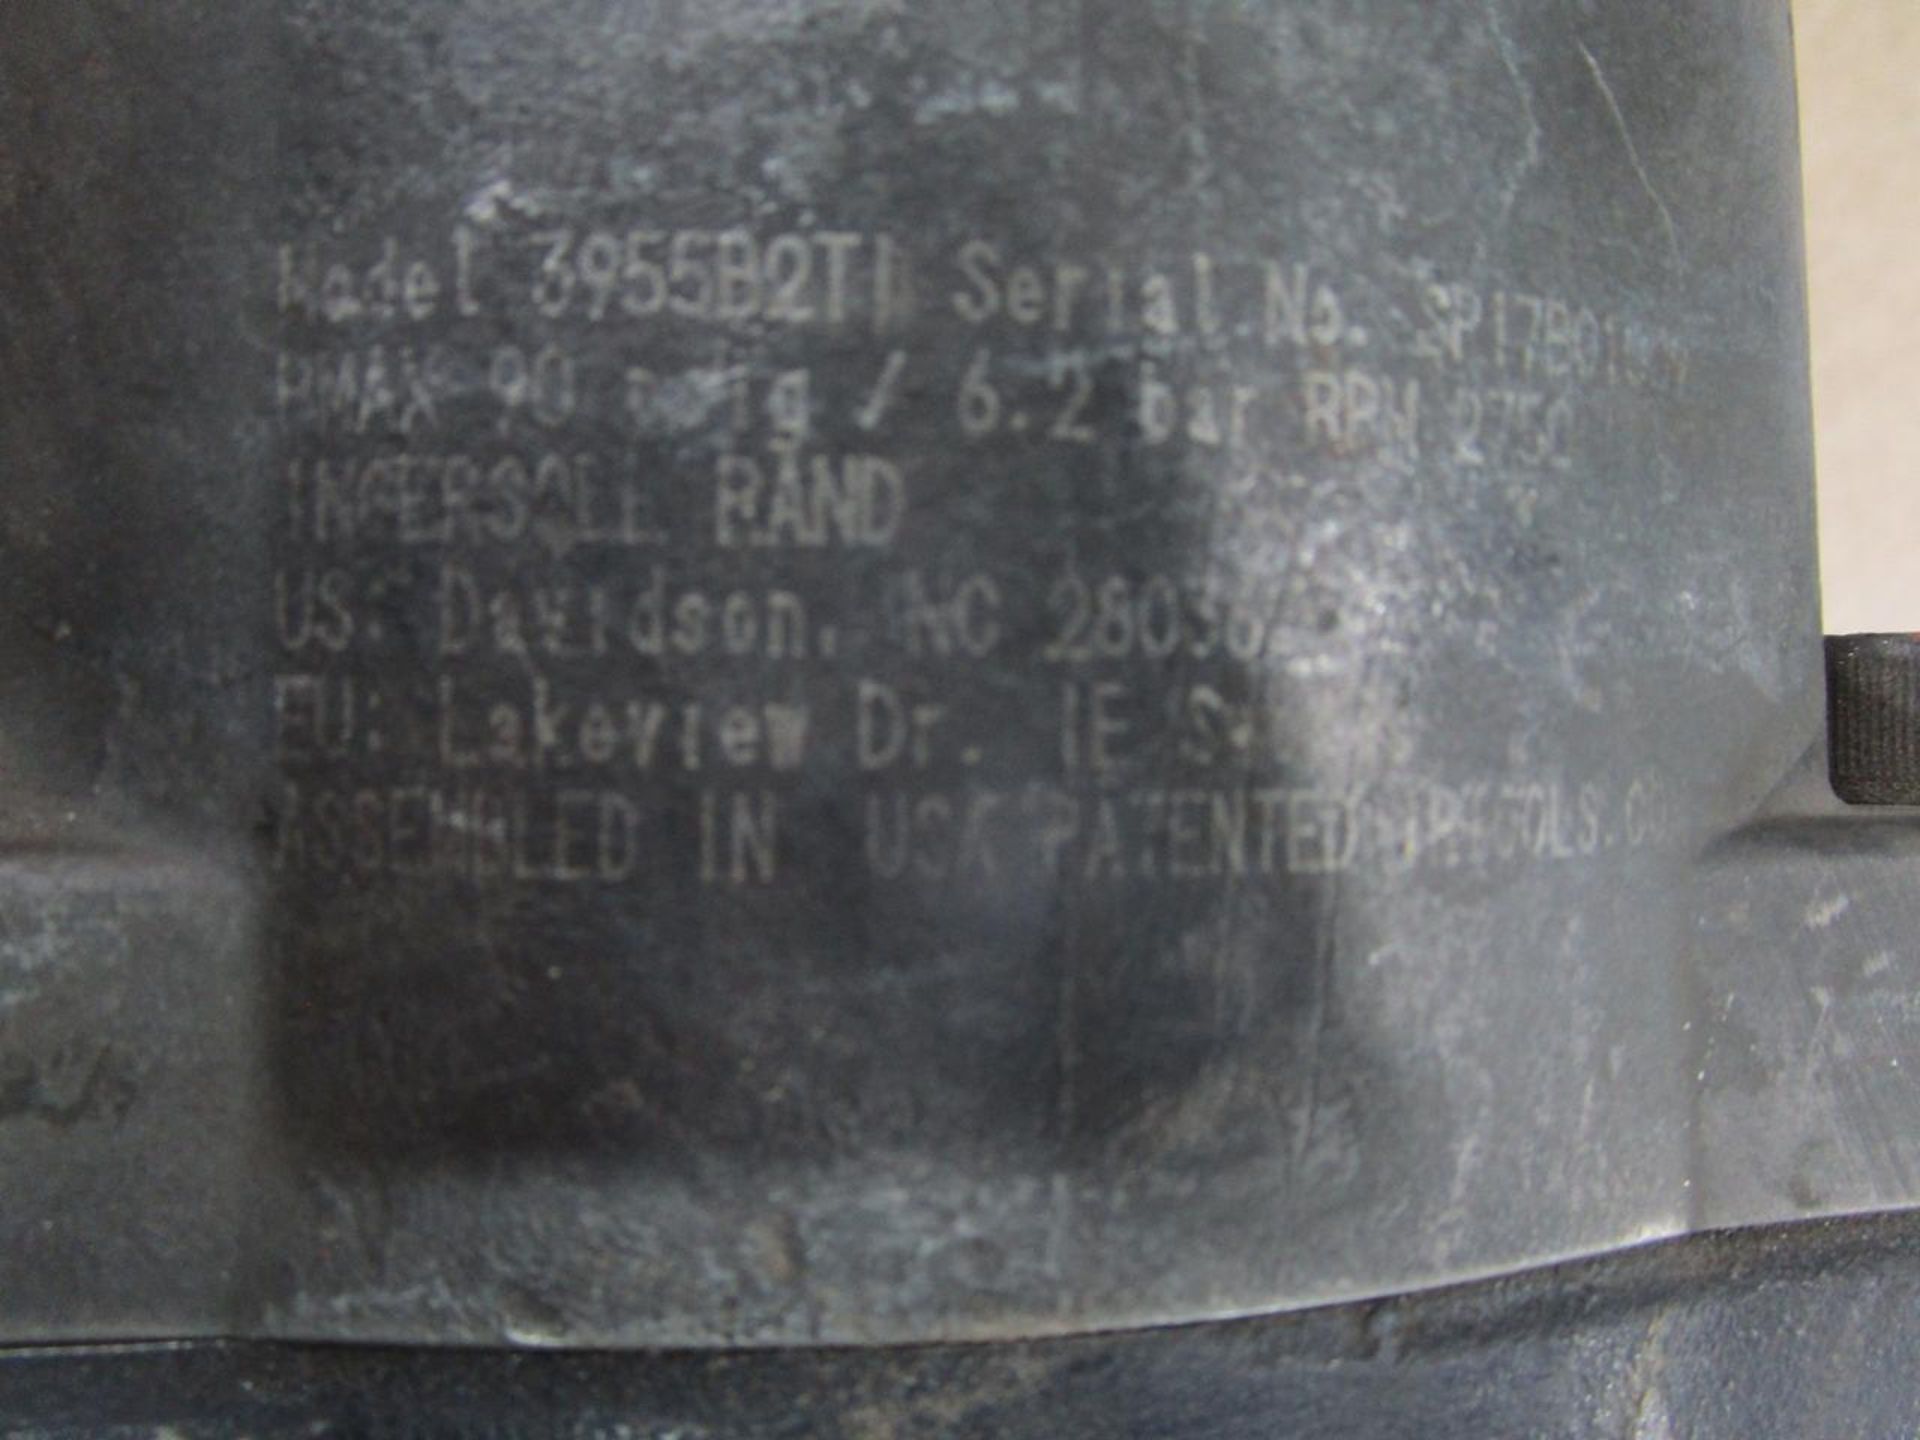 Ingersoll Rand 3940B2TI Pneumatic Impact Wrench - Image 3 of 3